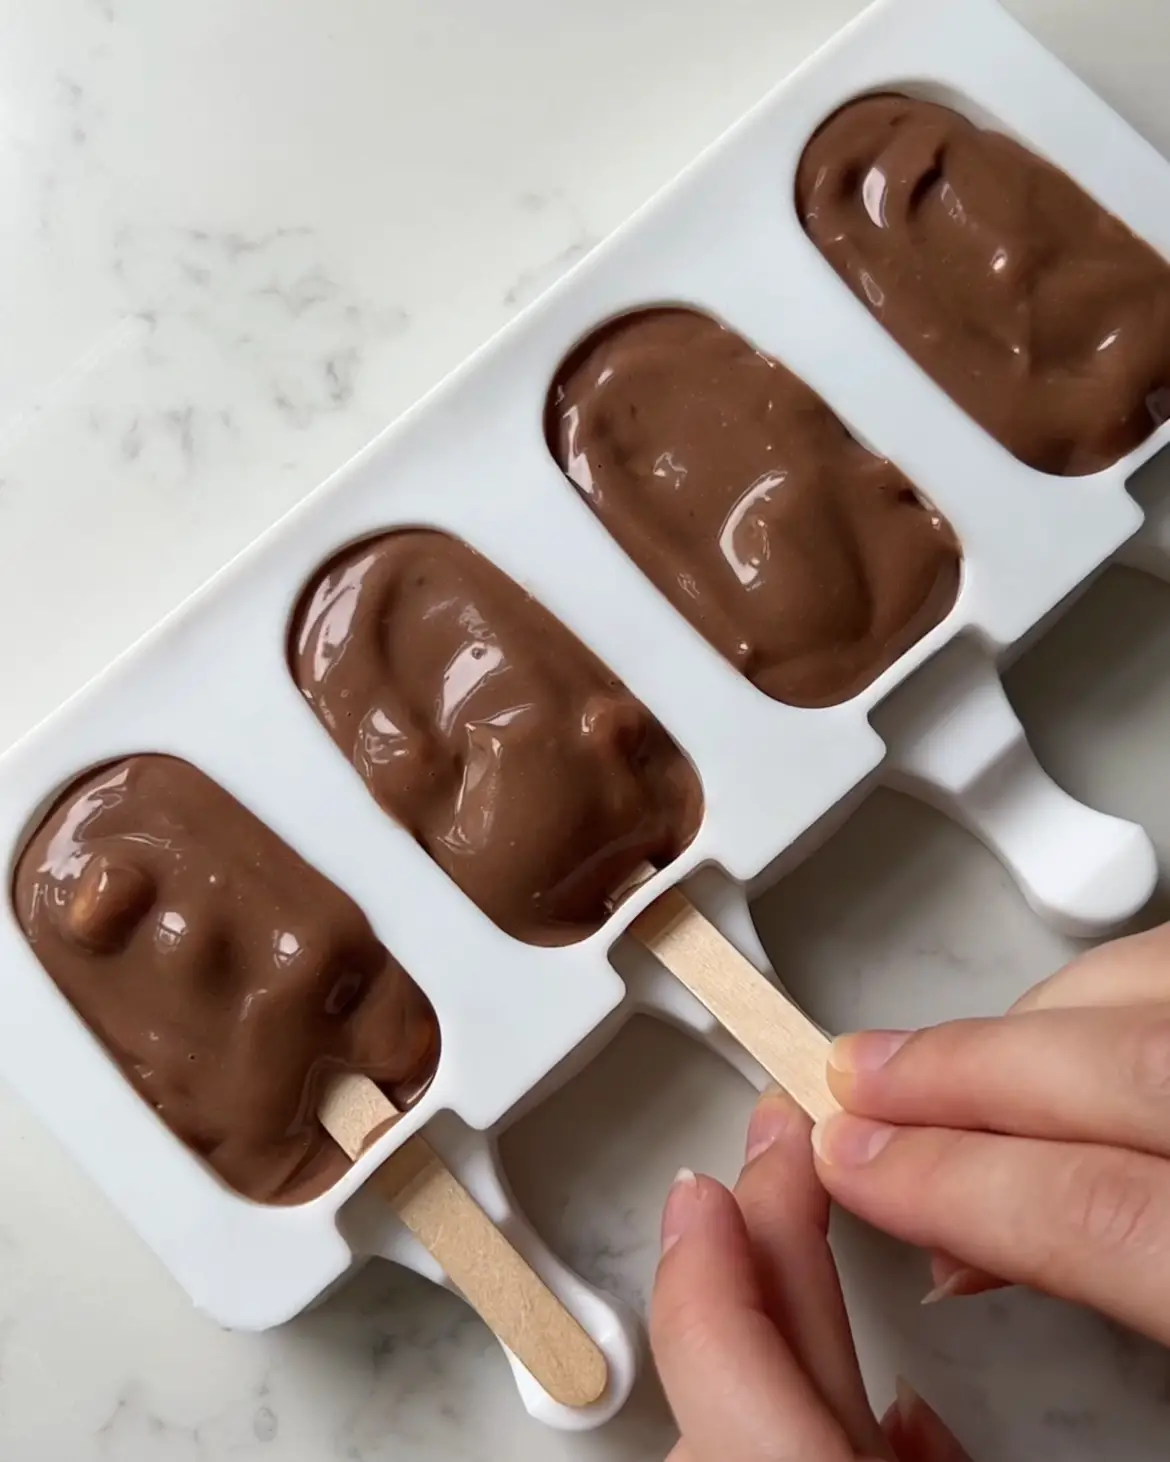 place the Chocolate Hazelnut Yoghurt Pops into moulds